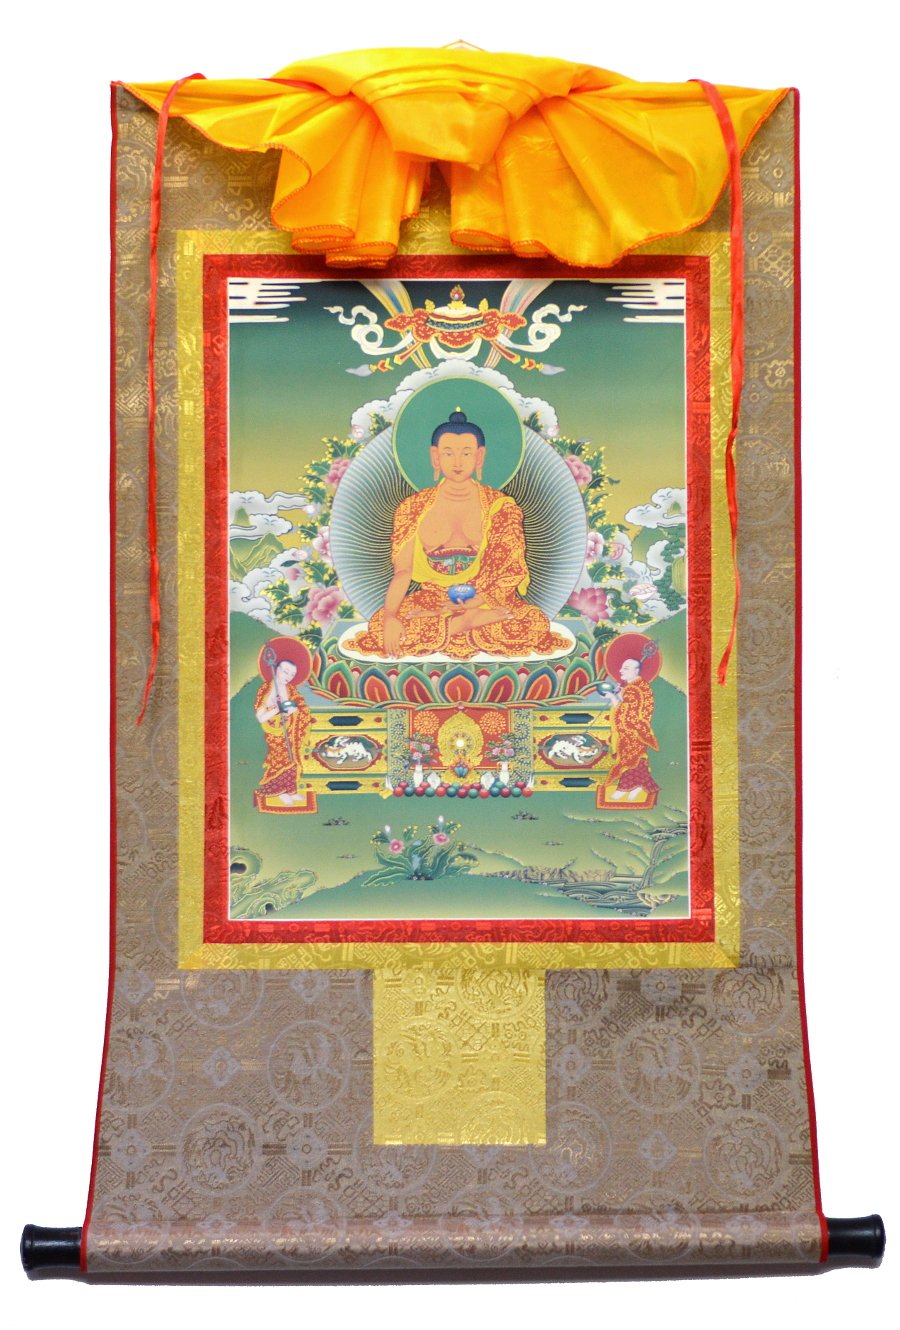 Тханка Будда Шакьямуни (печатная), ~ 51 х 83 см, изображение: ~ 32 х 45 см